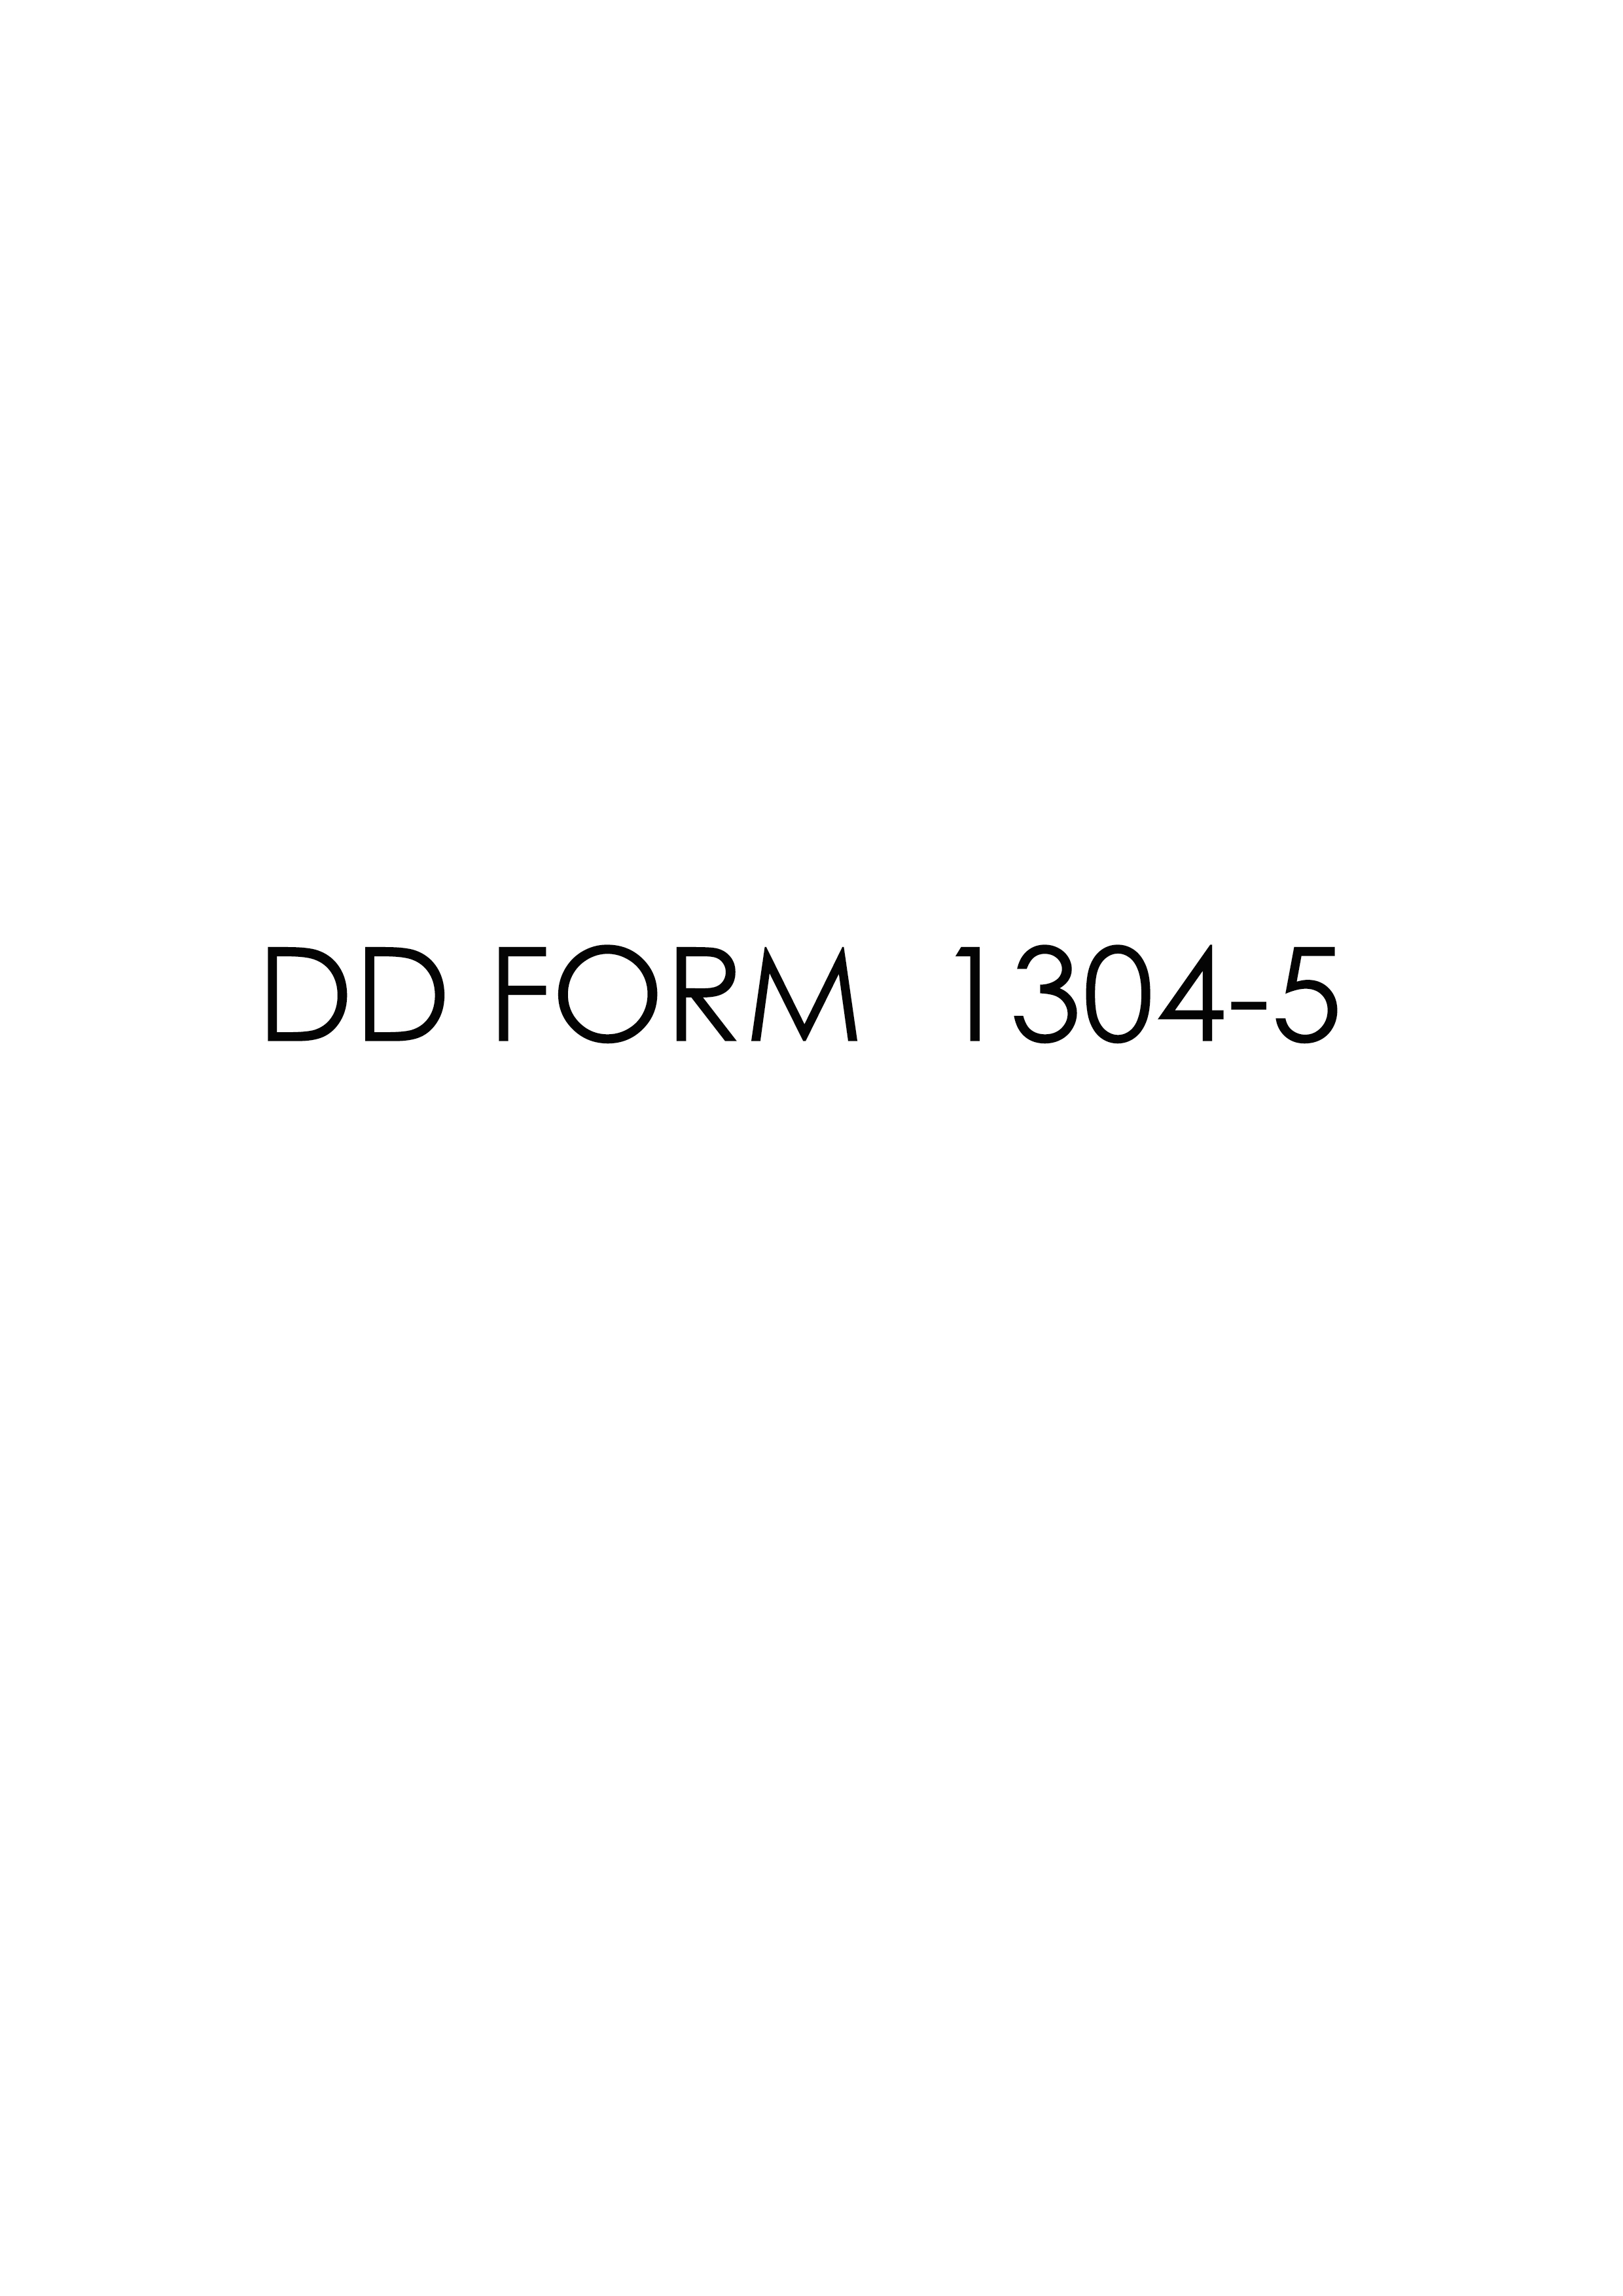 Download dd Form 1304-5